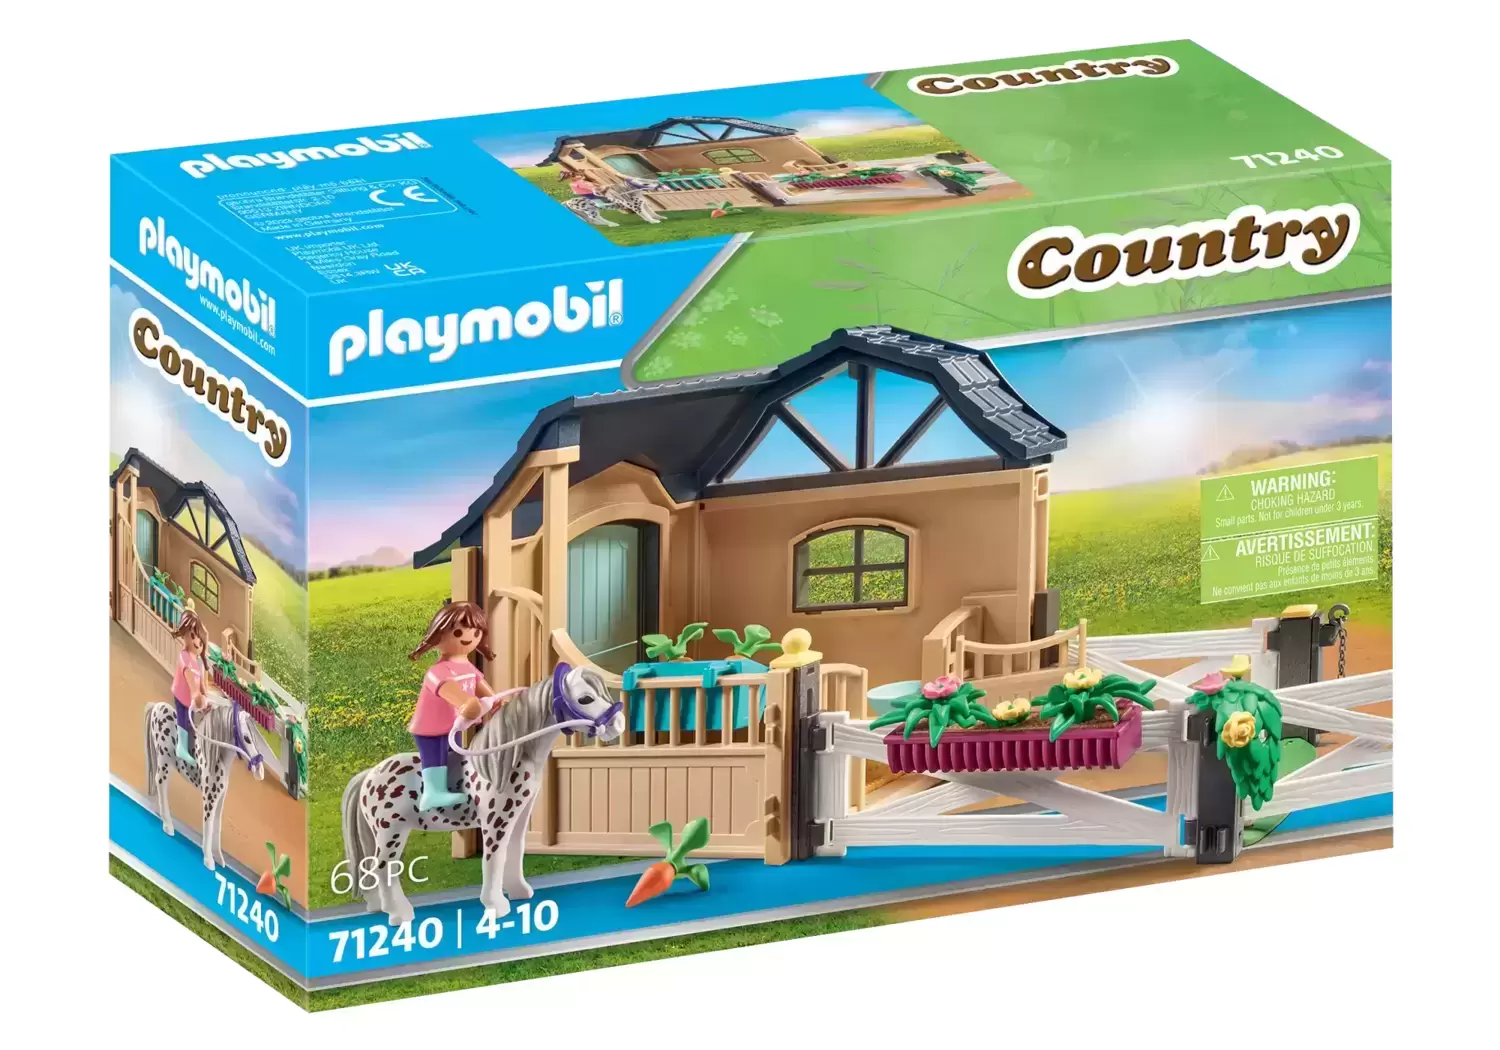 Playmobil Country Cavalière Et Poney Islandais